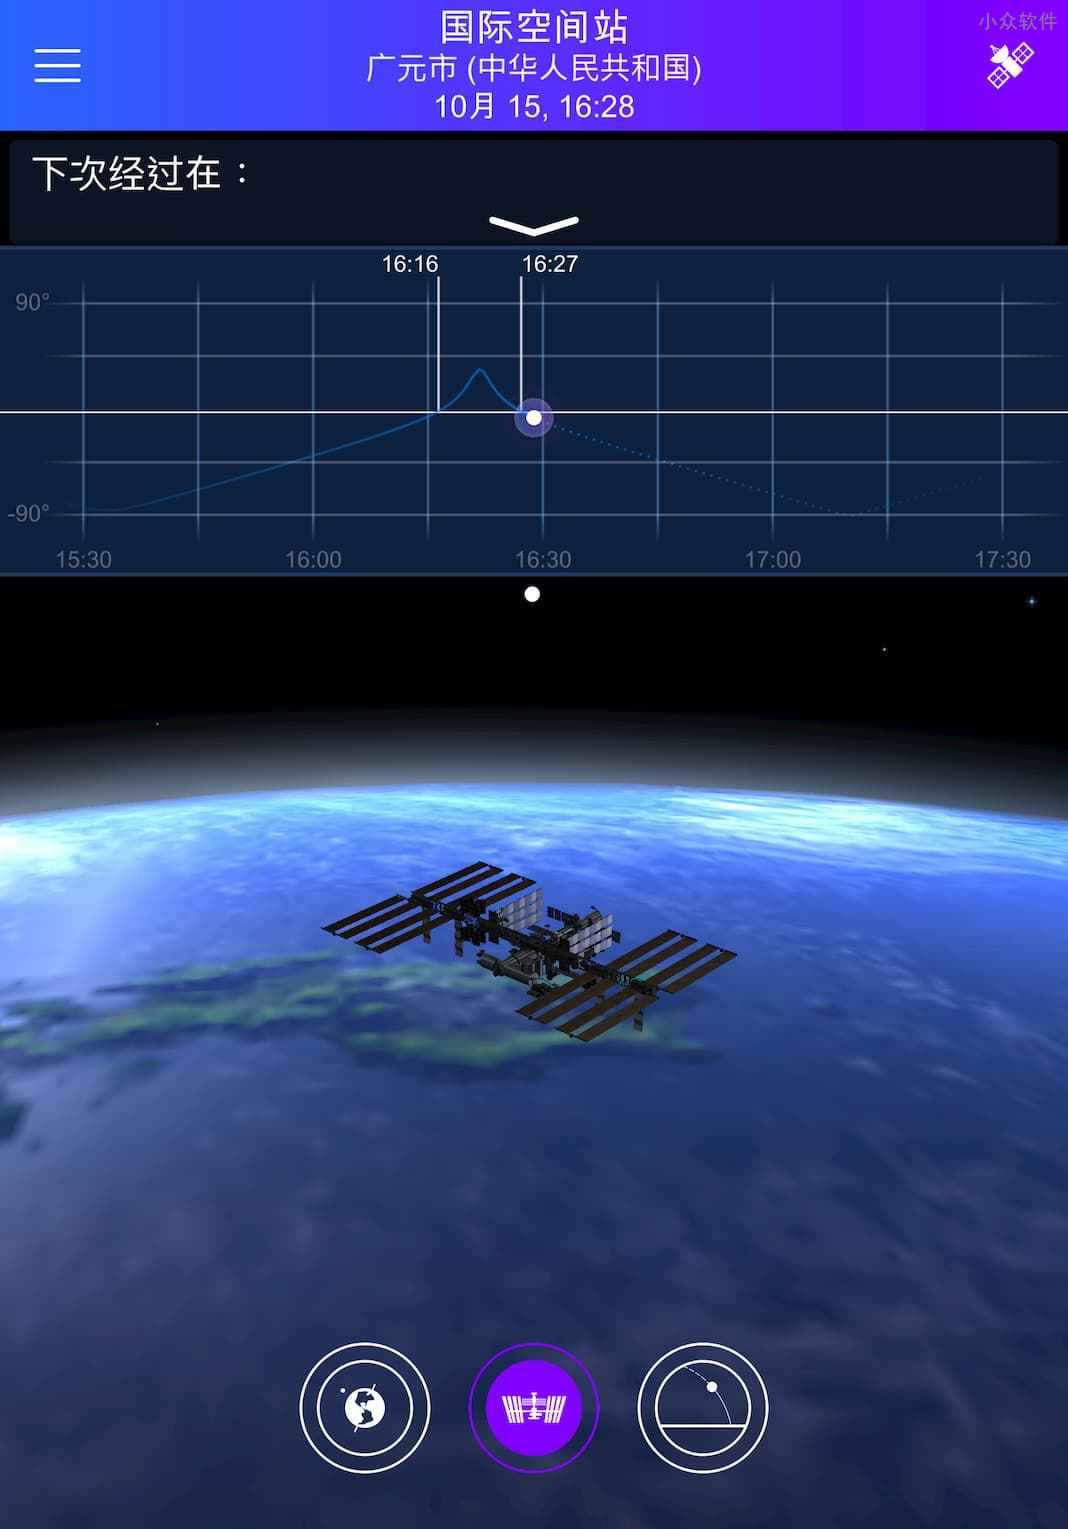 Satellite Tracker - 人造卫星观测指南，实时追踪国际空间站、星链（Starlink）、风云系列卫星、北斗卫星 3